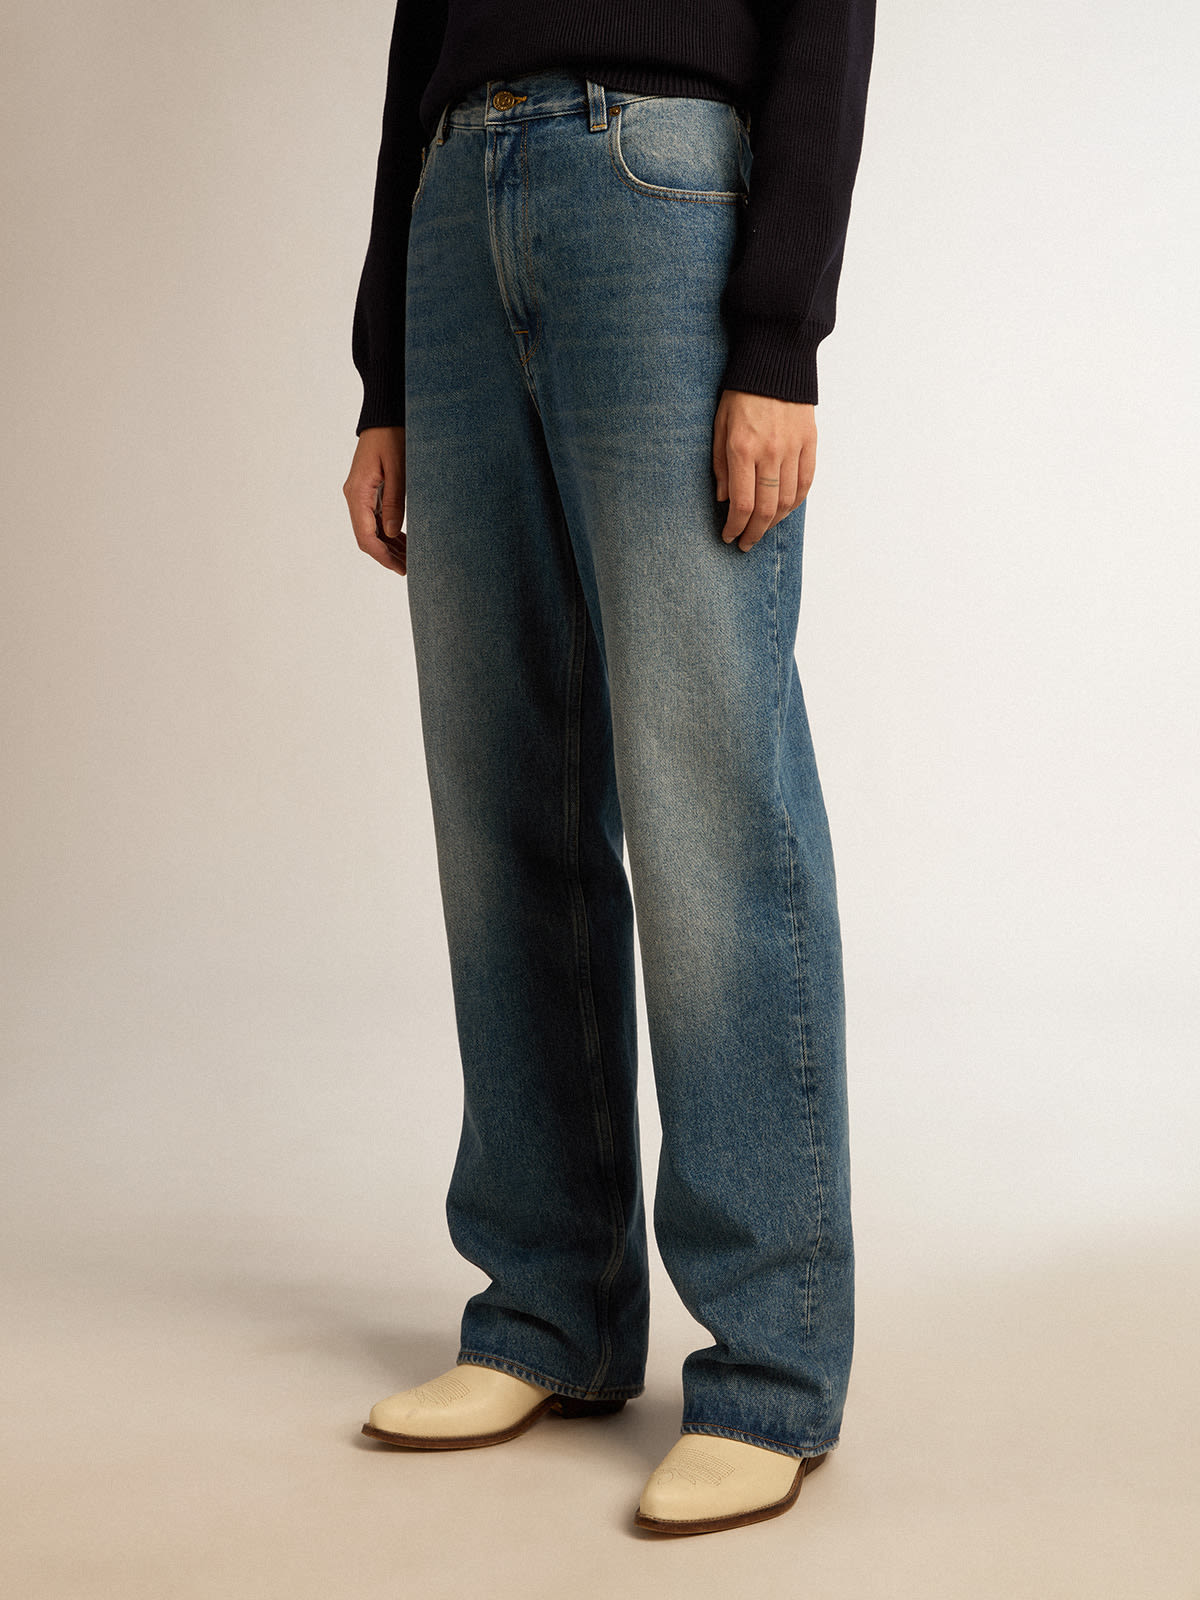 Golden Goose - Women's jeans with medium wash in 